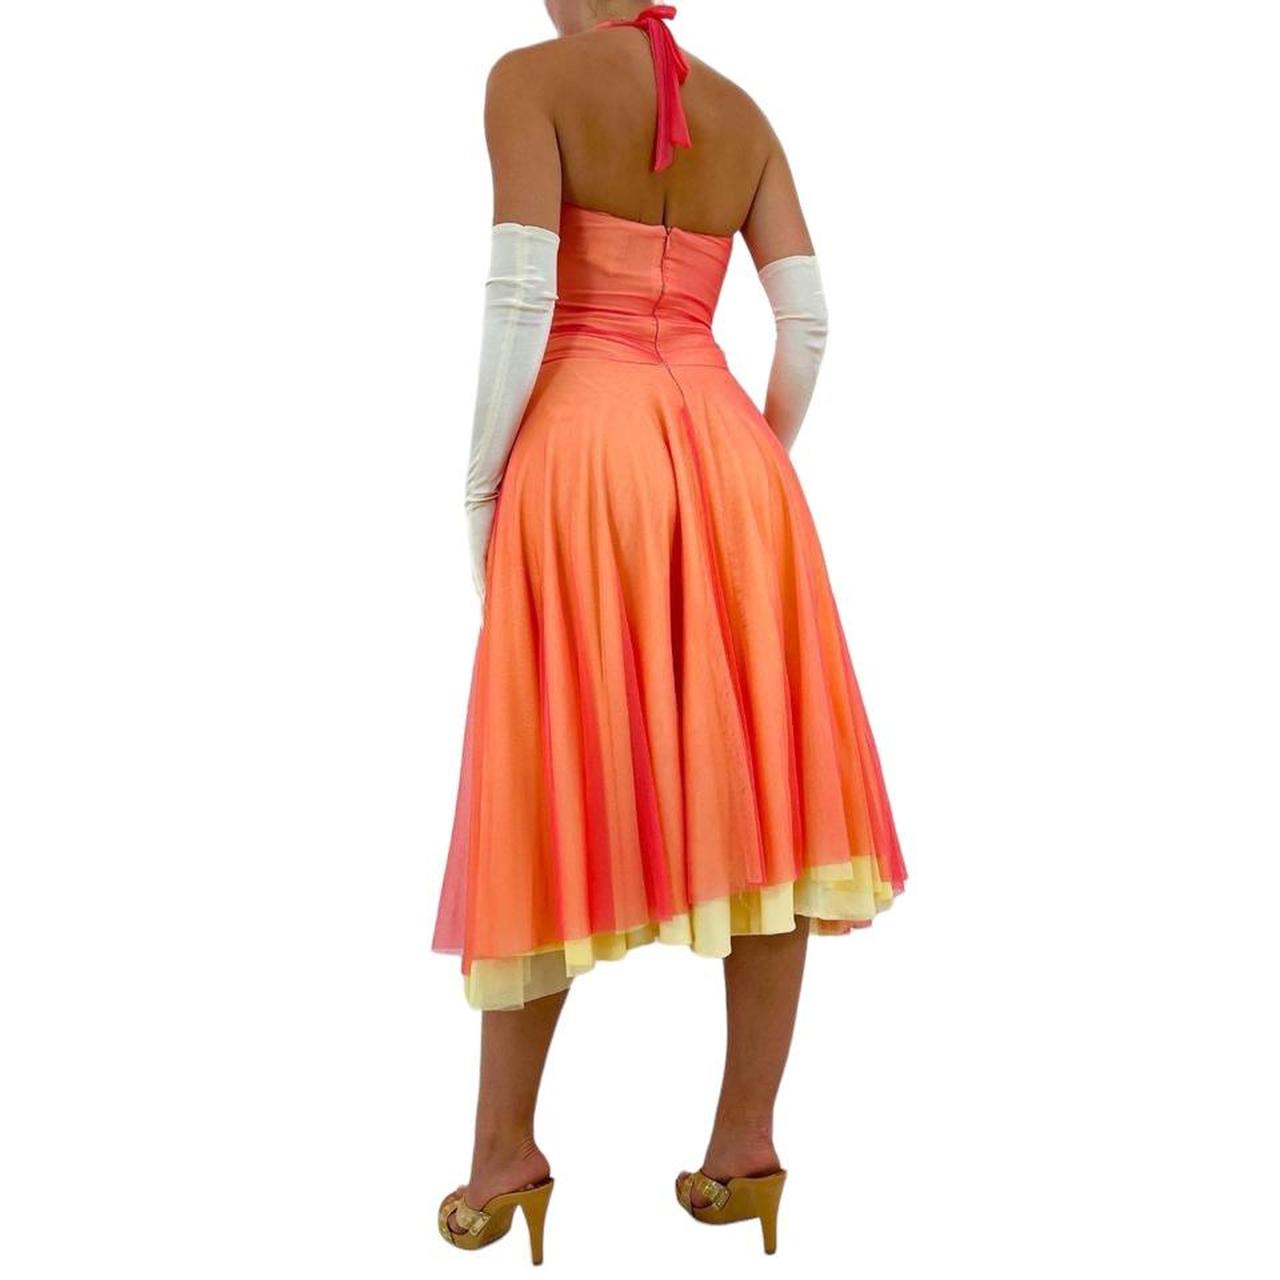 Y2k Vintage Orange + Yellow Formal Mesh Layered Dress w/ Silver Hardware [XS-S]